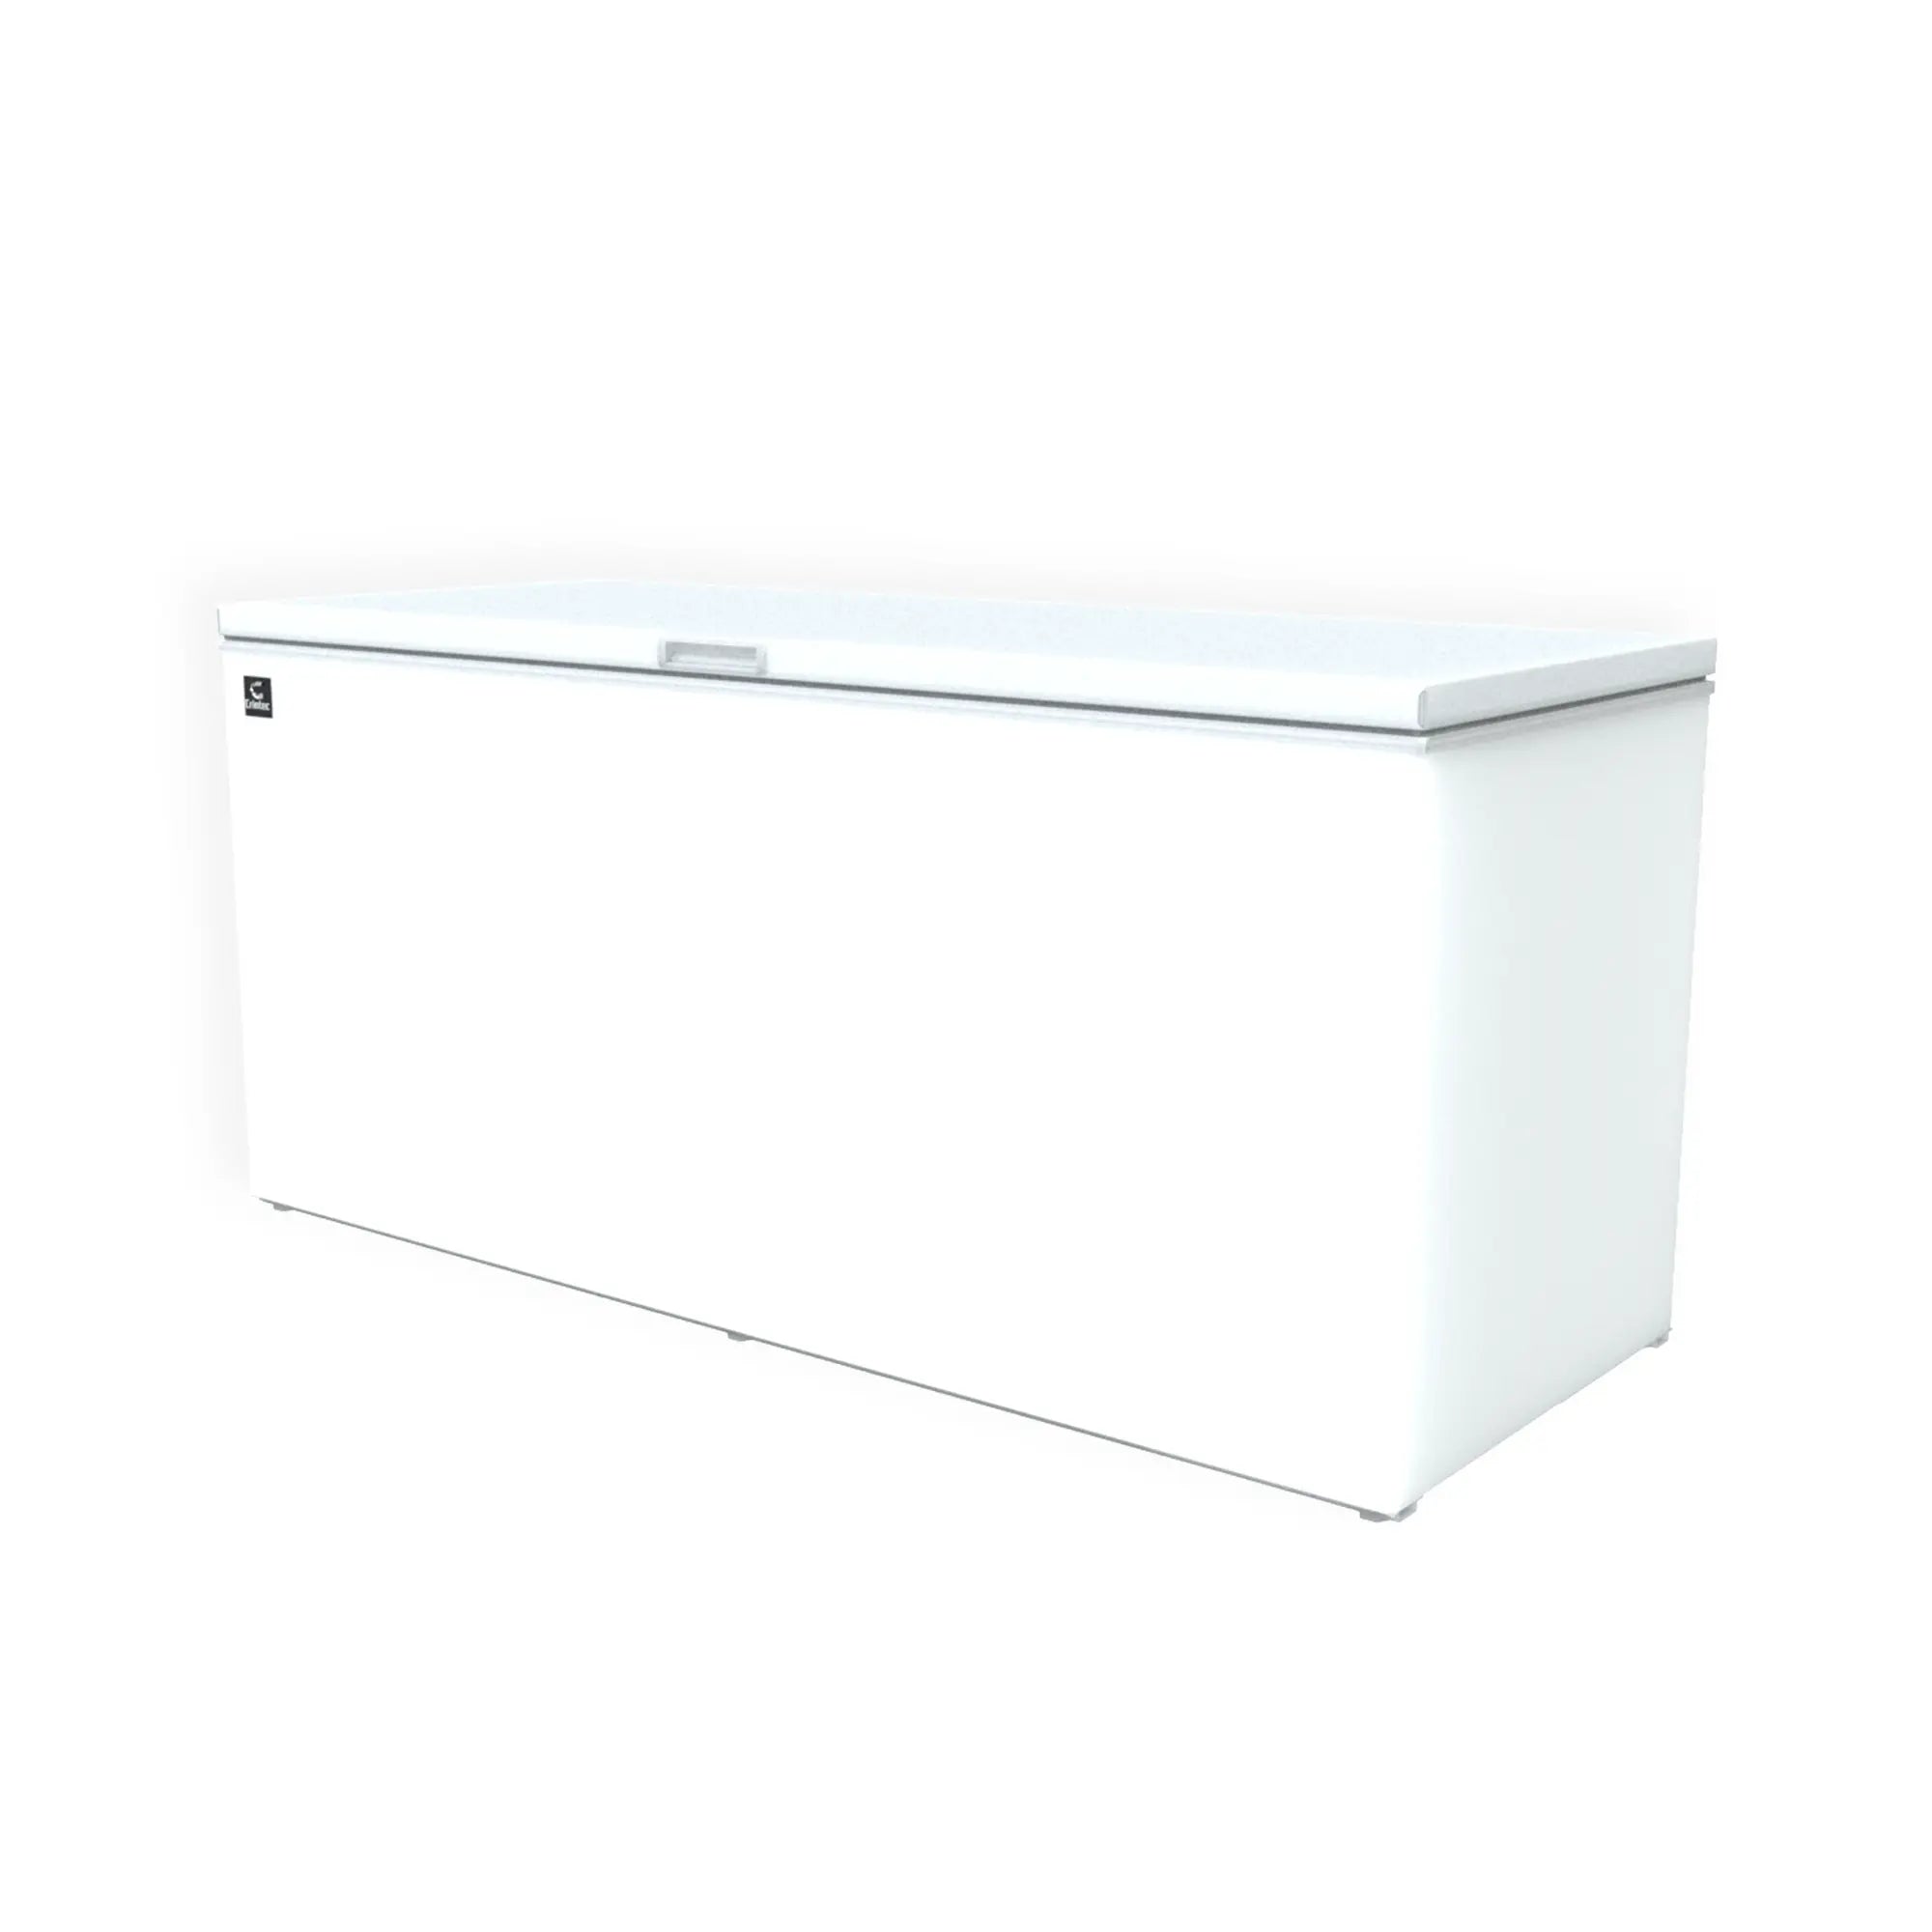 Congelador horizontal con puerta solida de 25 ft³